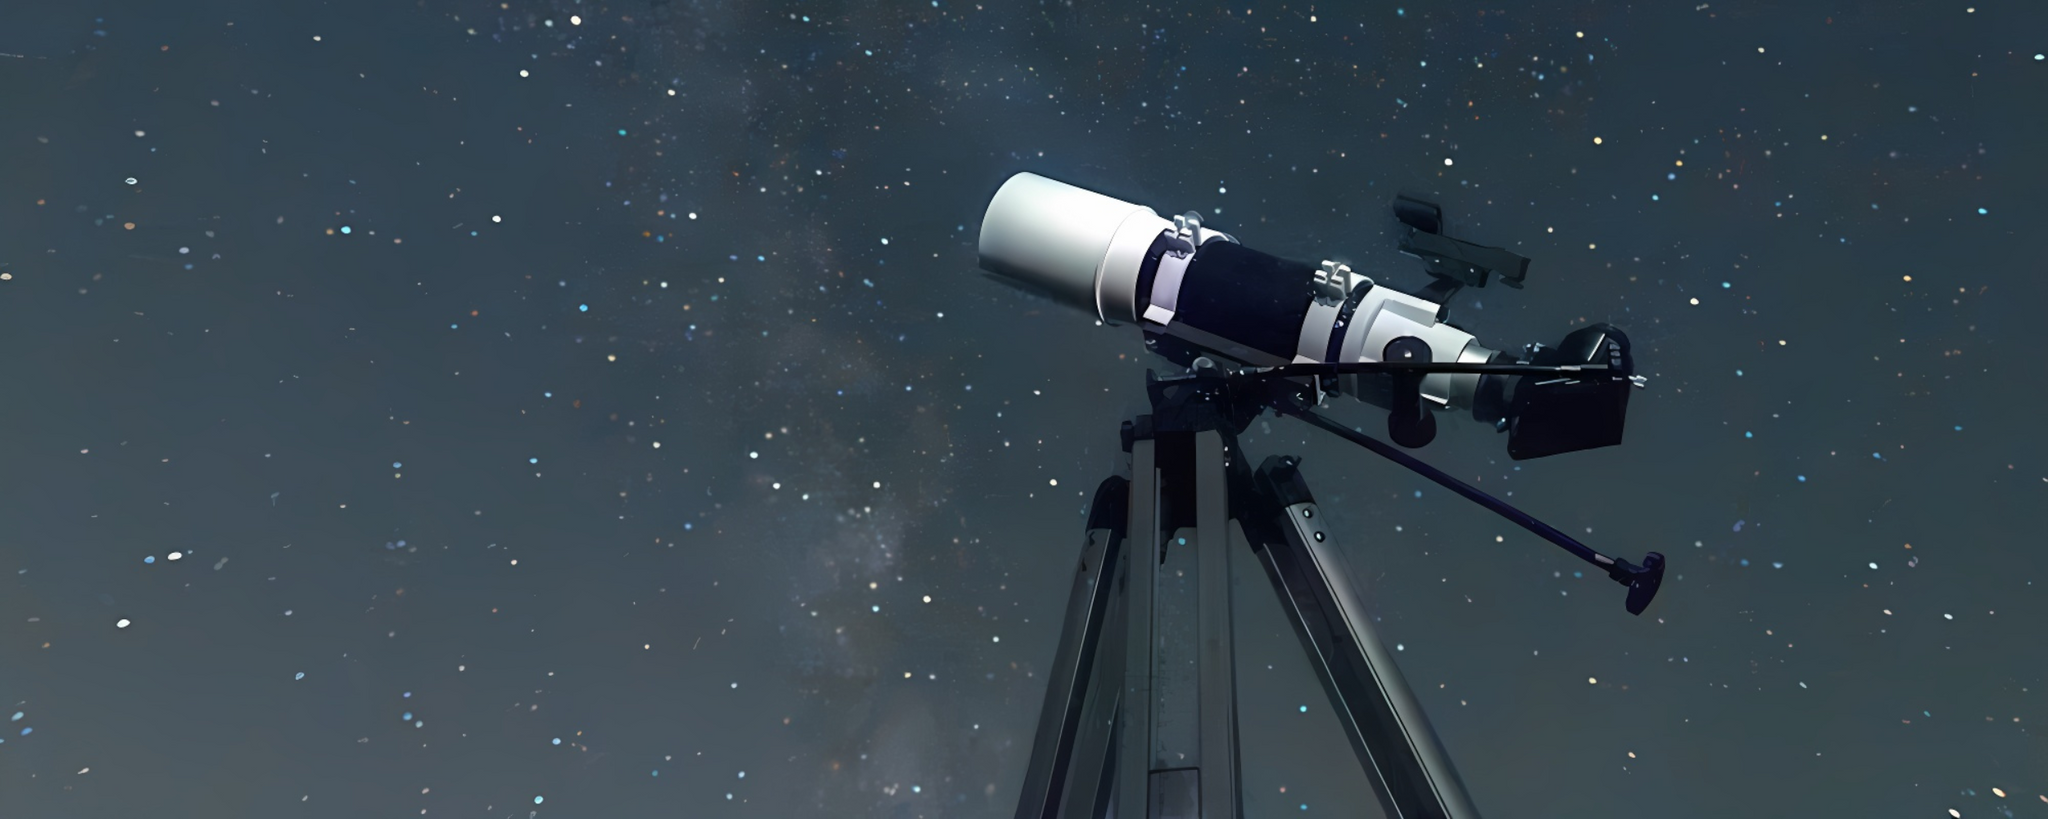 Consejos para elegir un telescopio astronómico